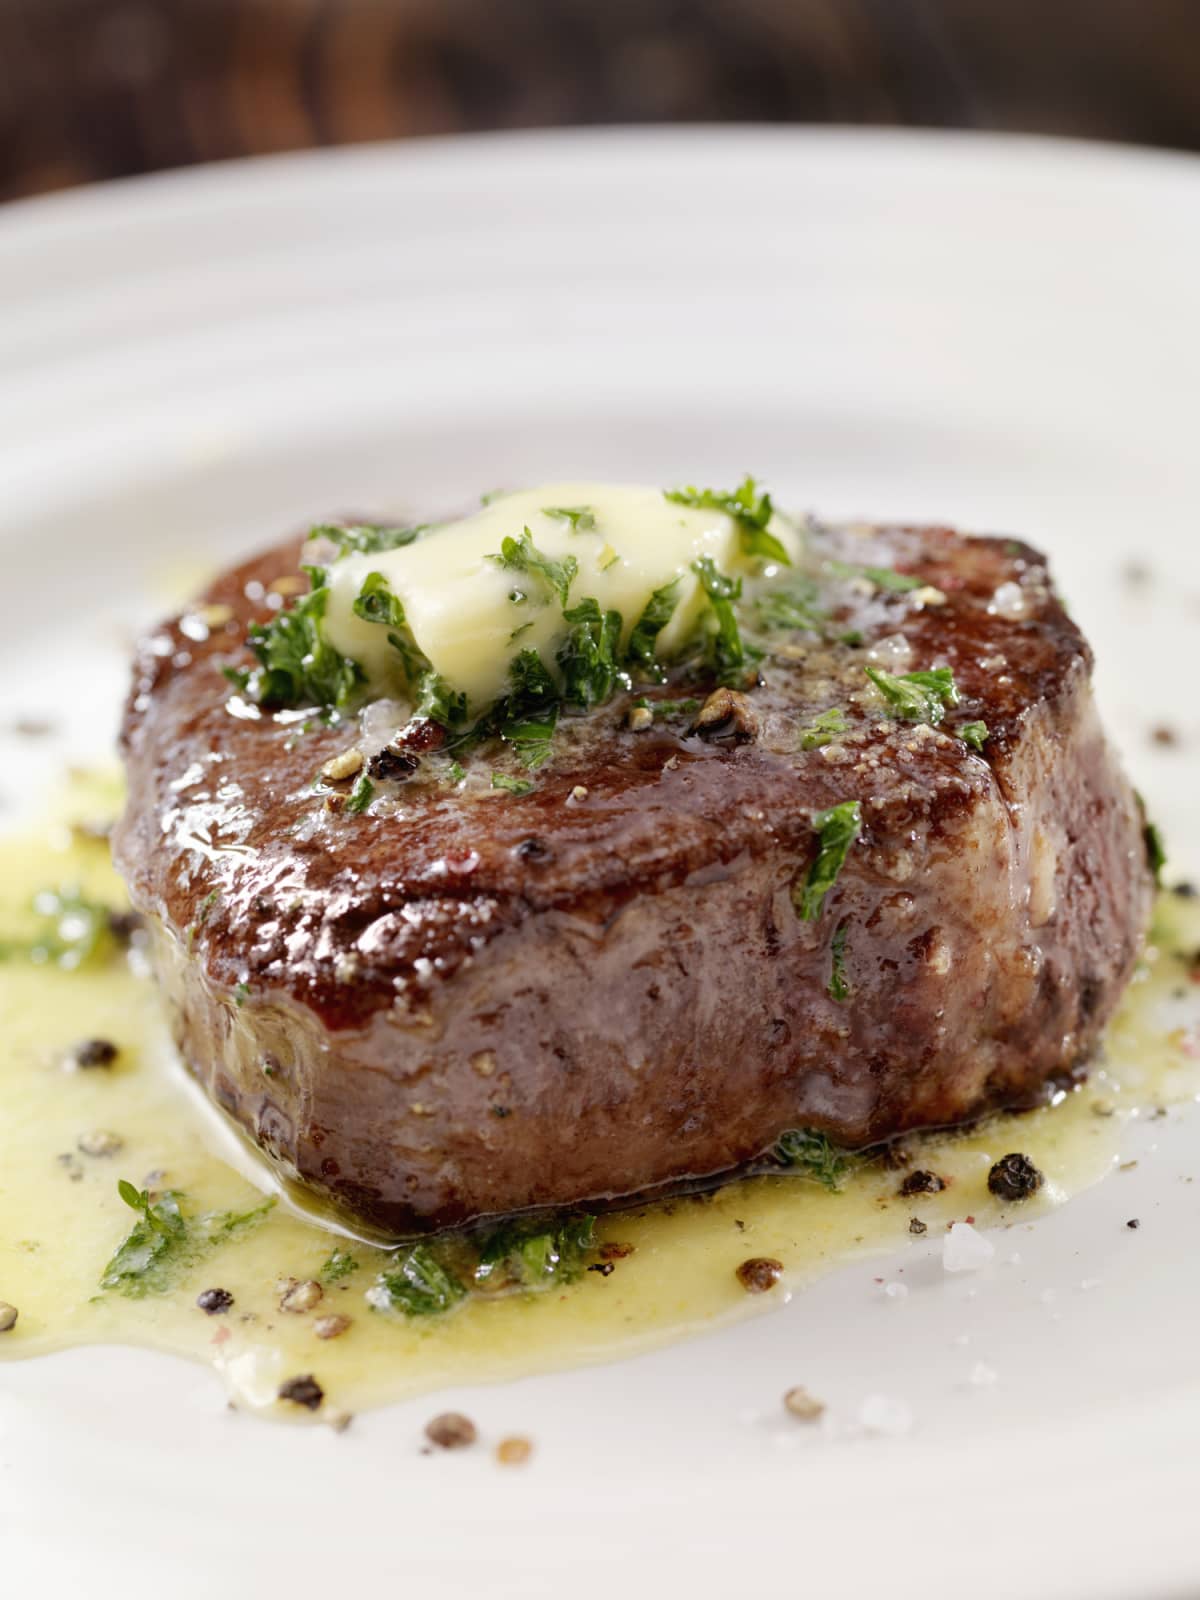 Medium rare fillet mignon steak with herb garlic butter on a white plate